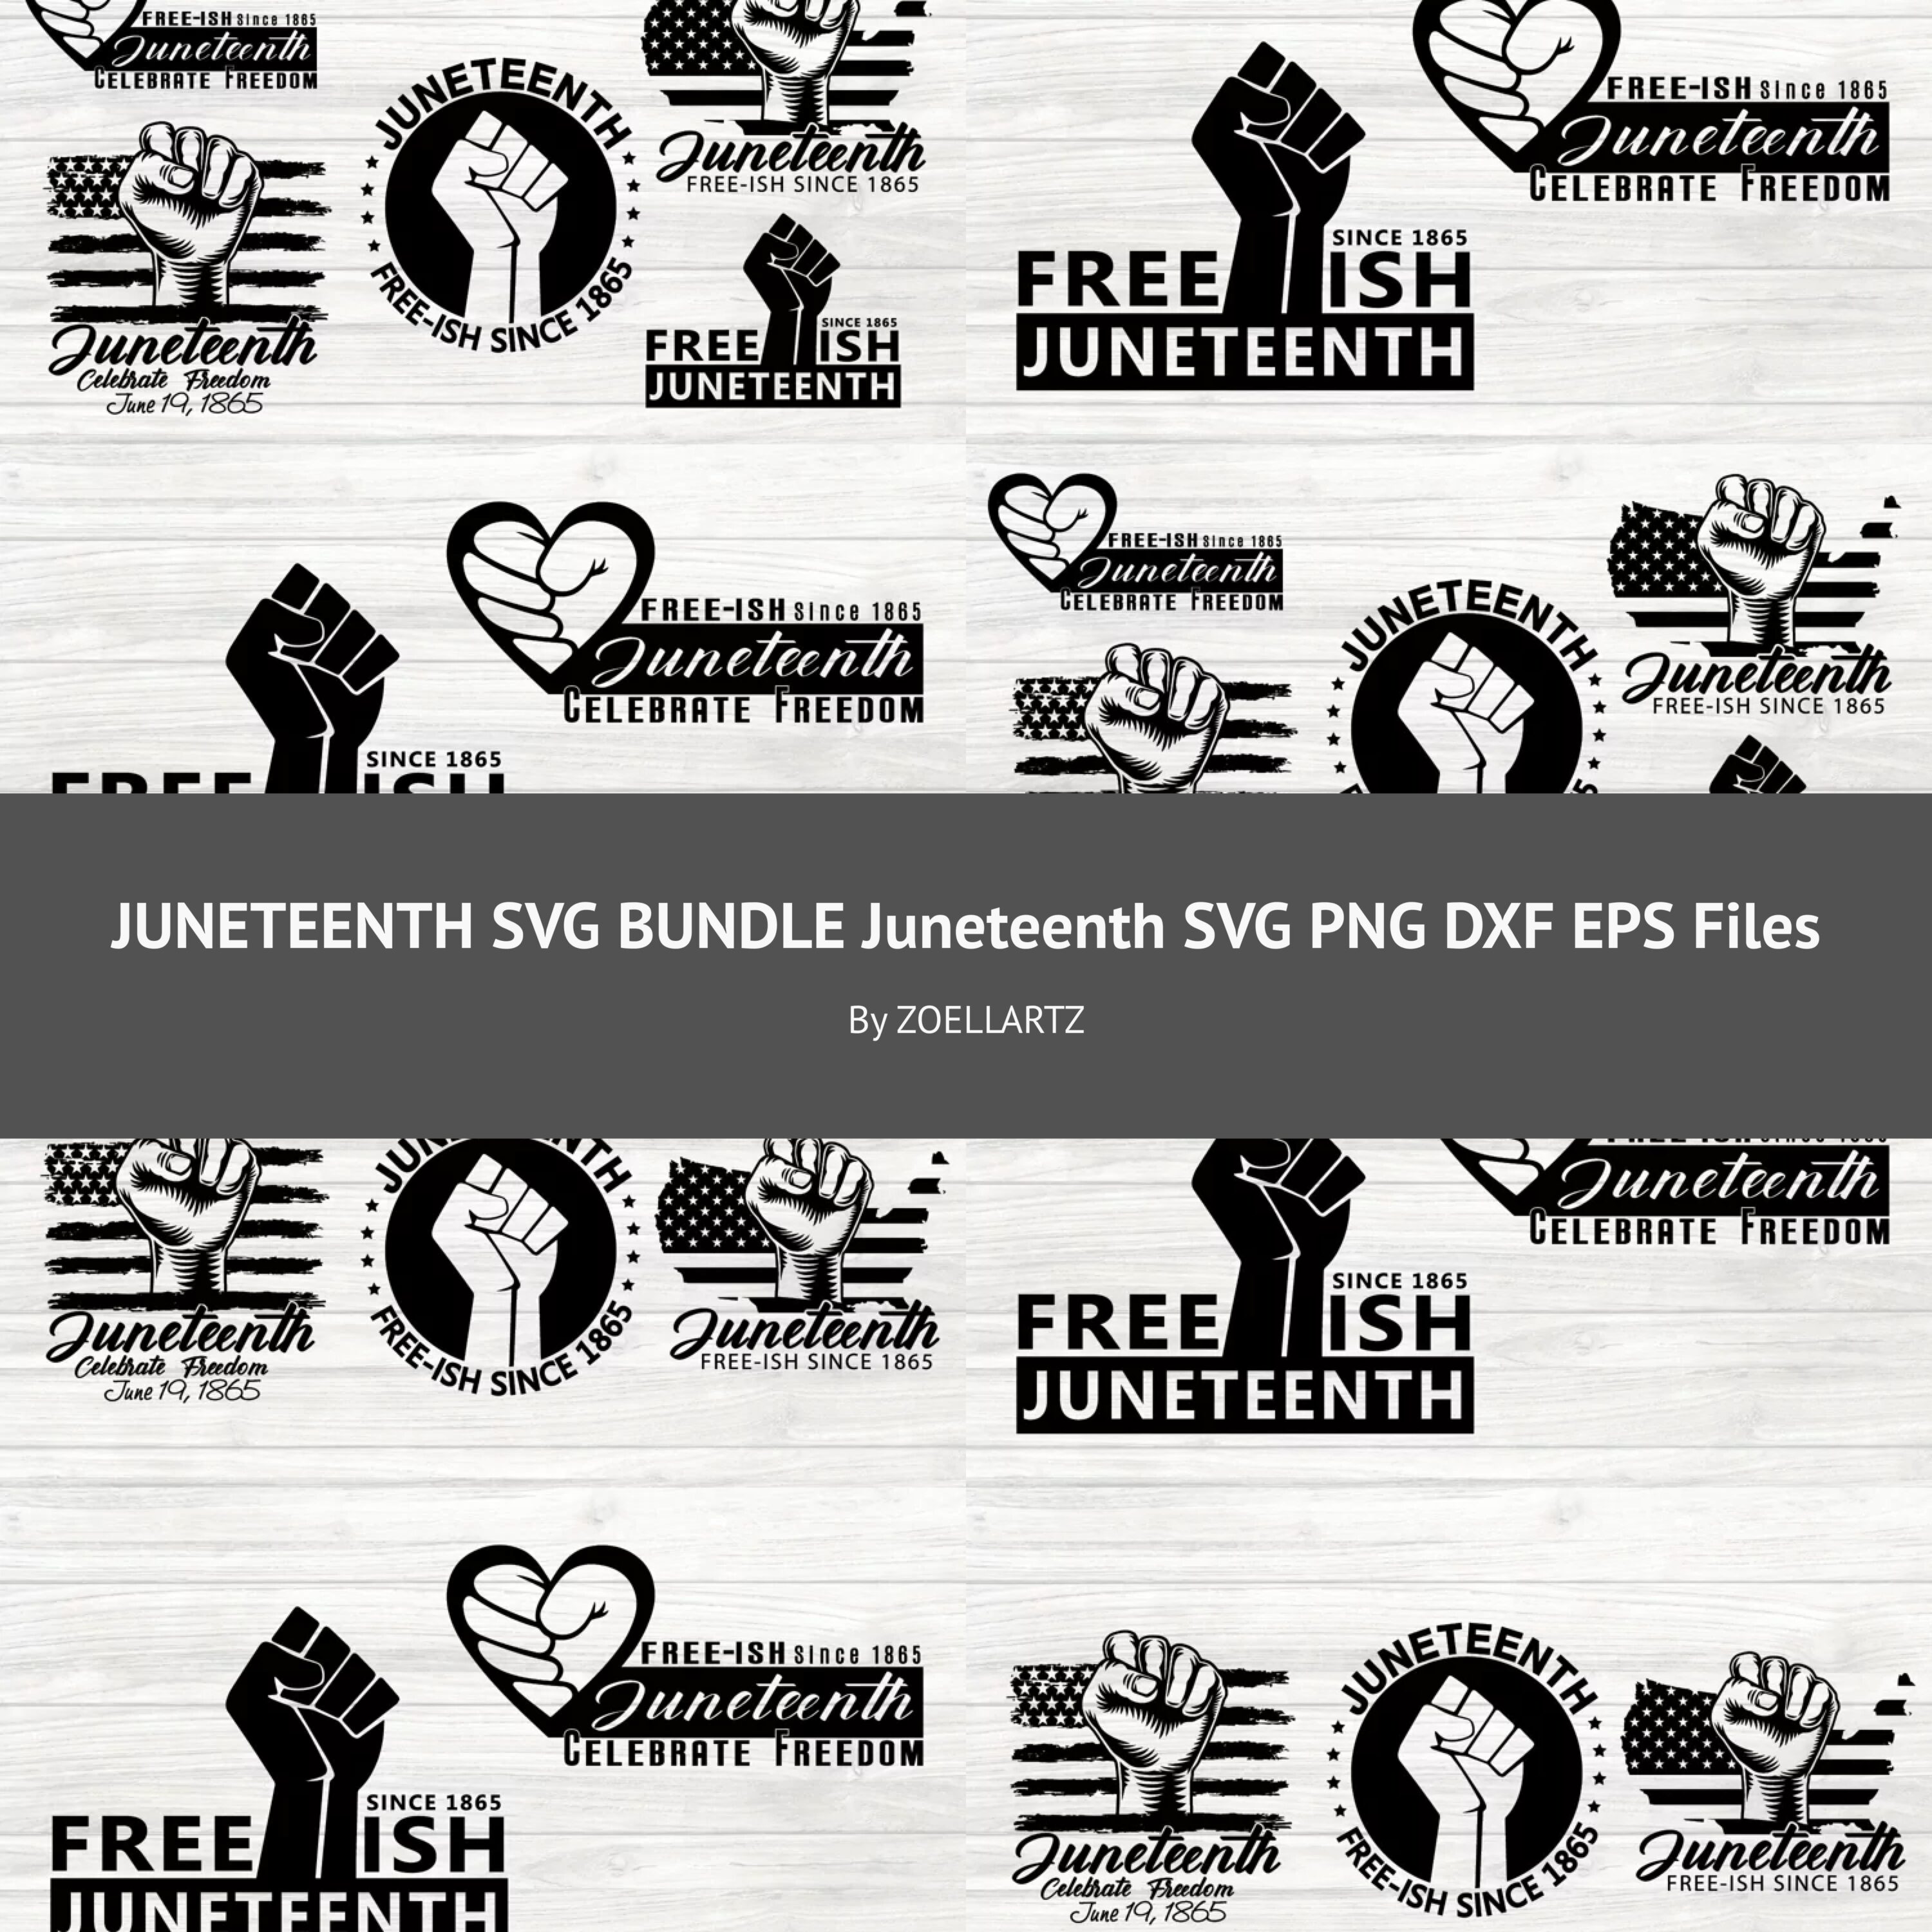 Juneteenth svg bundle - main image preview.